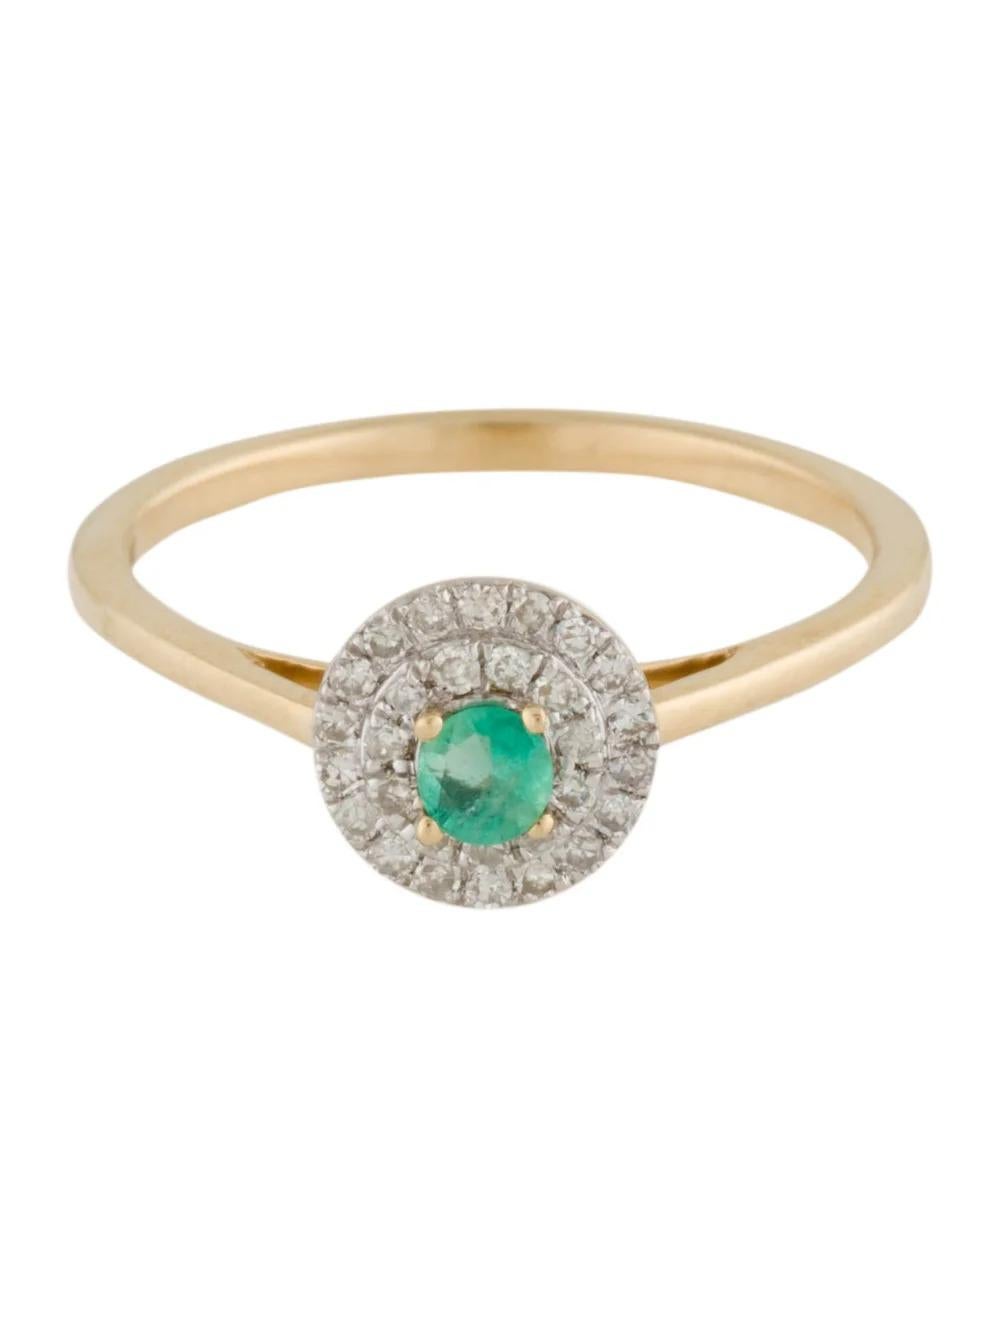 Round Cut Vintage 14K Emerald Diamond Cocktail Ring Size 6.5 - Fine Jewelry, Luxury Piece For Sale